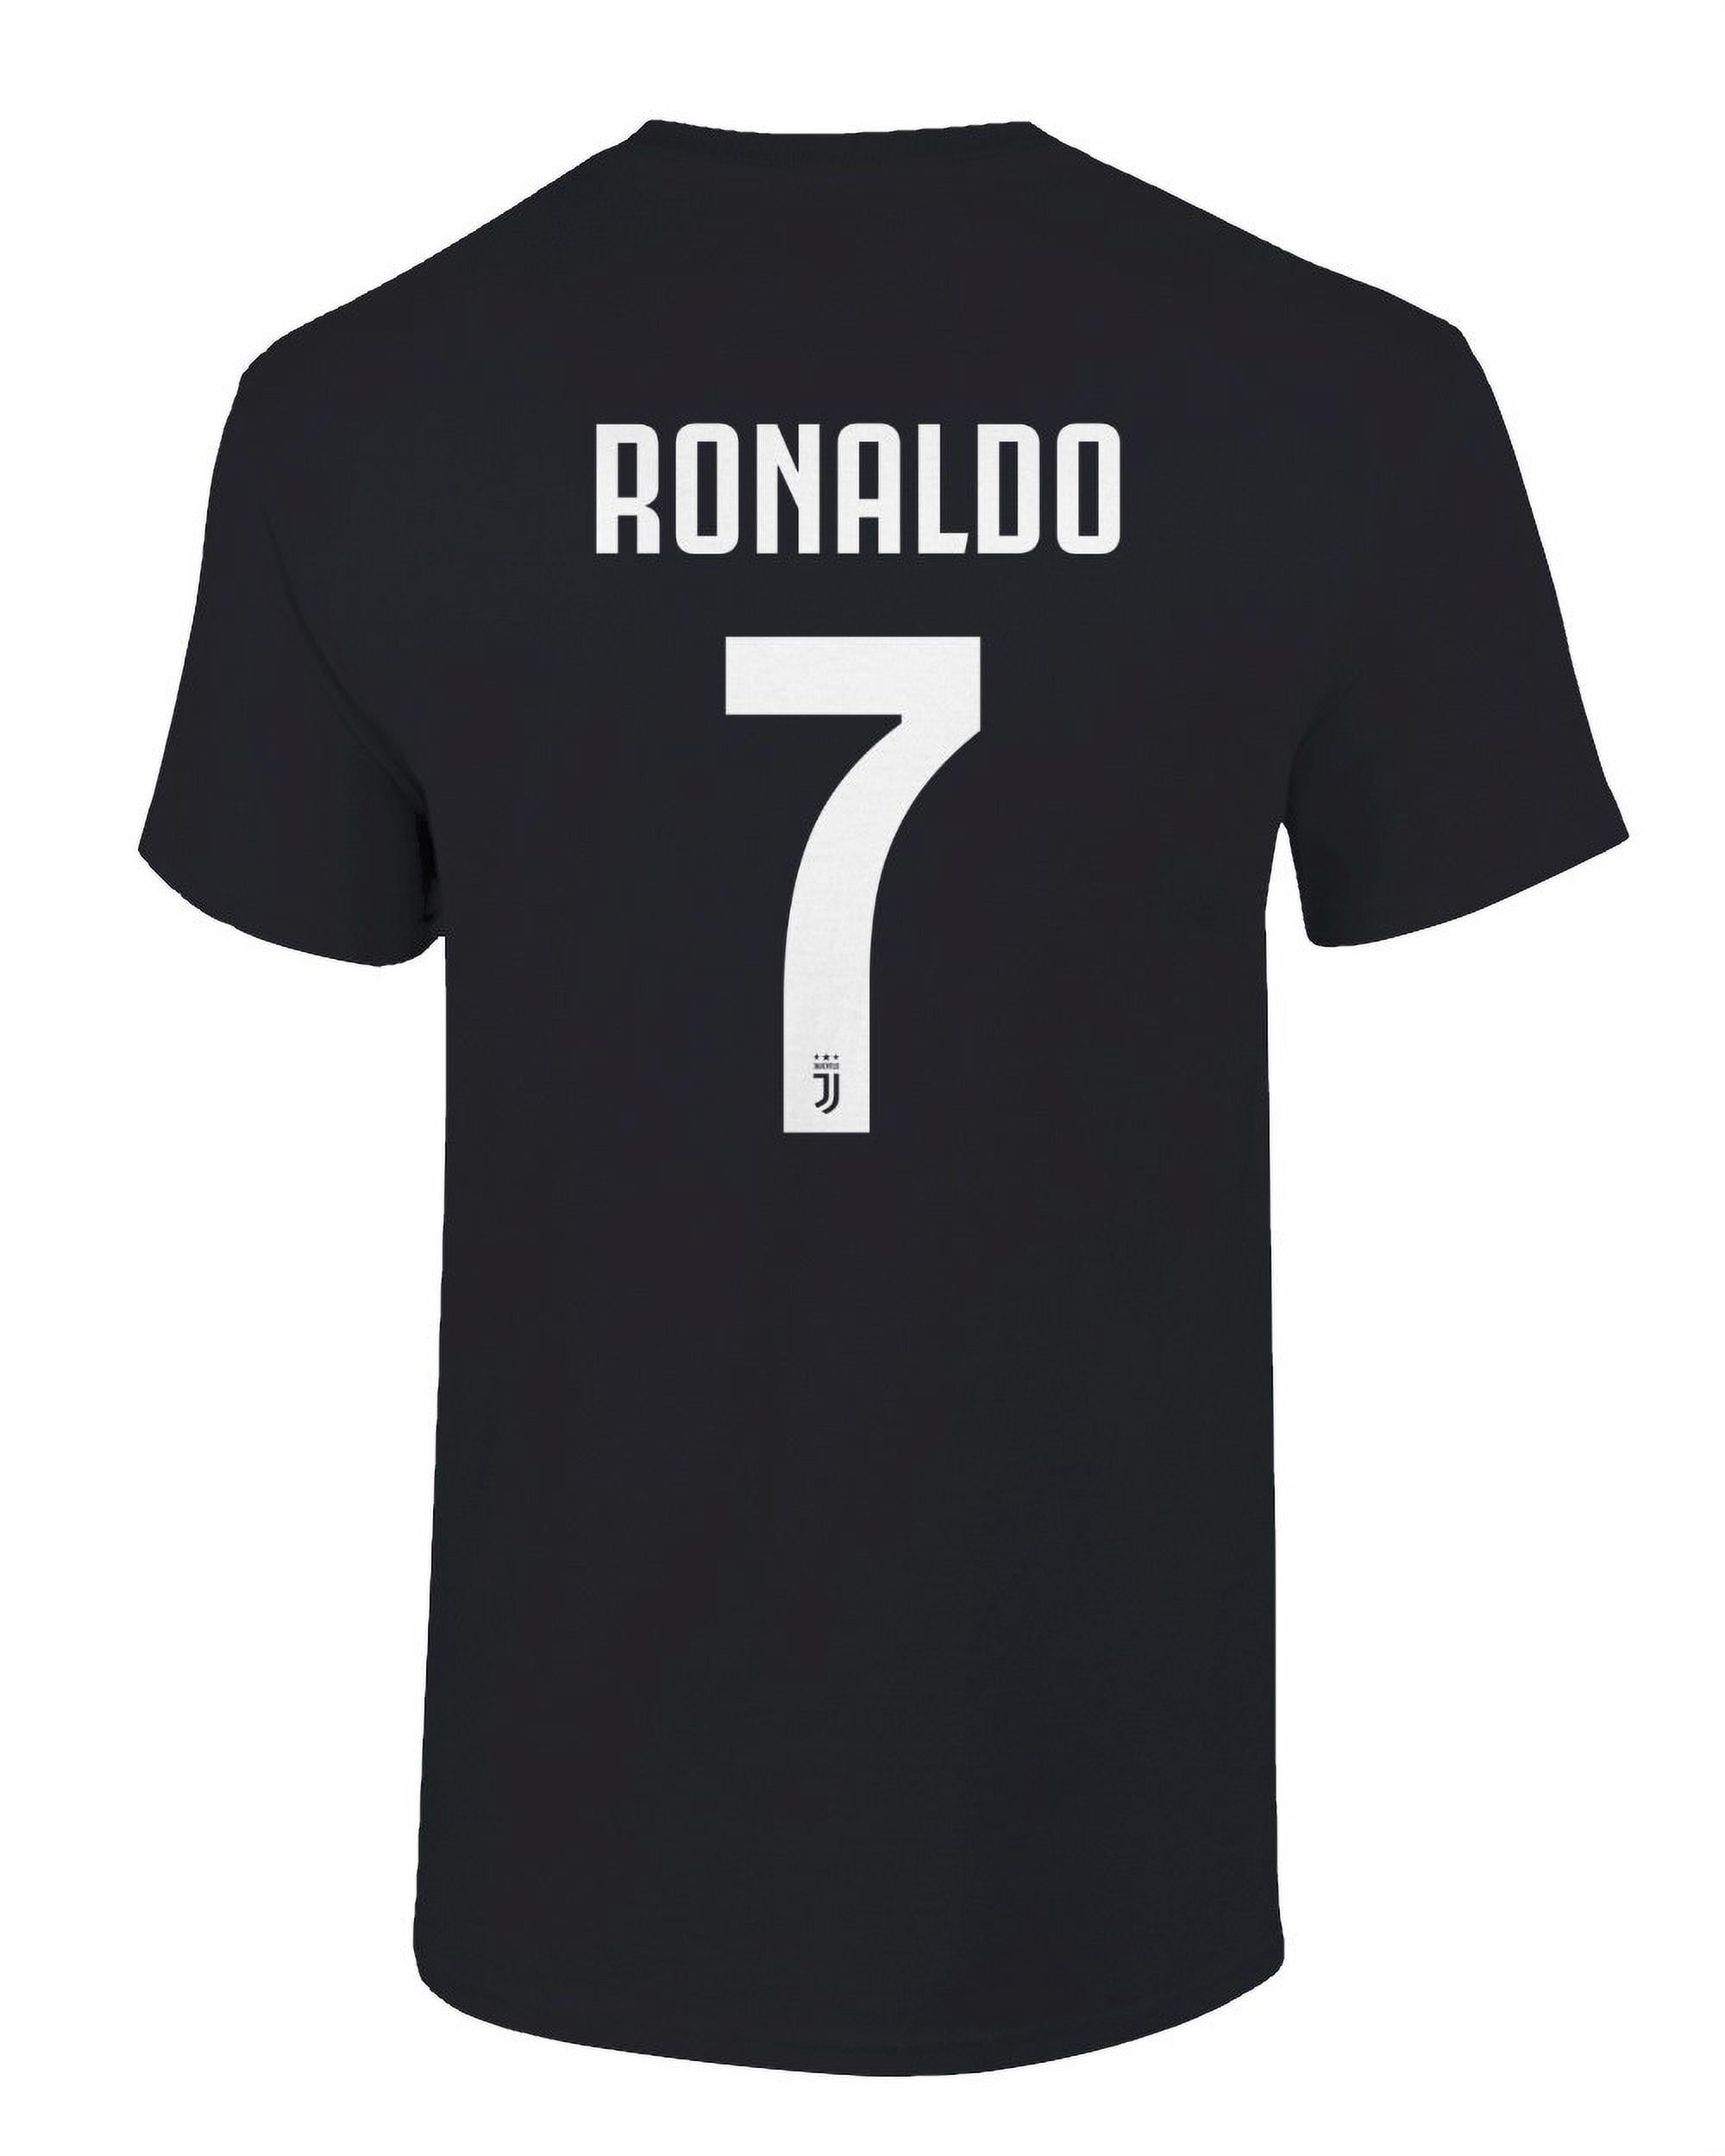 ronaldo shirt youth